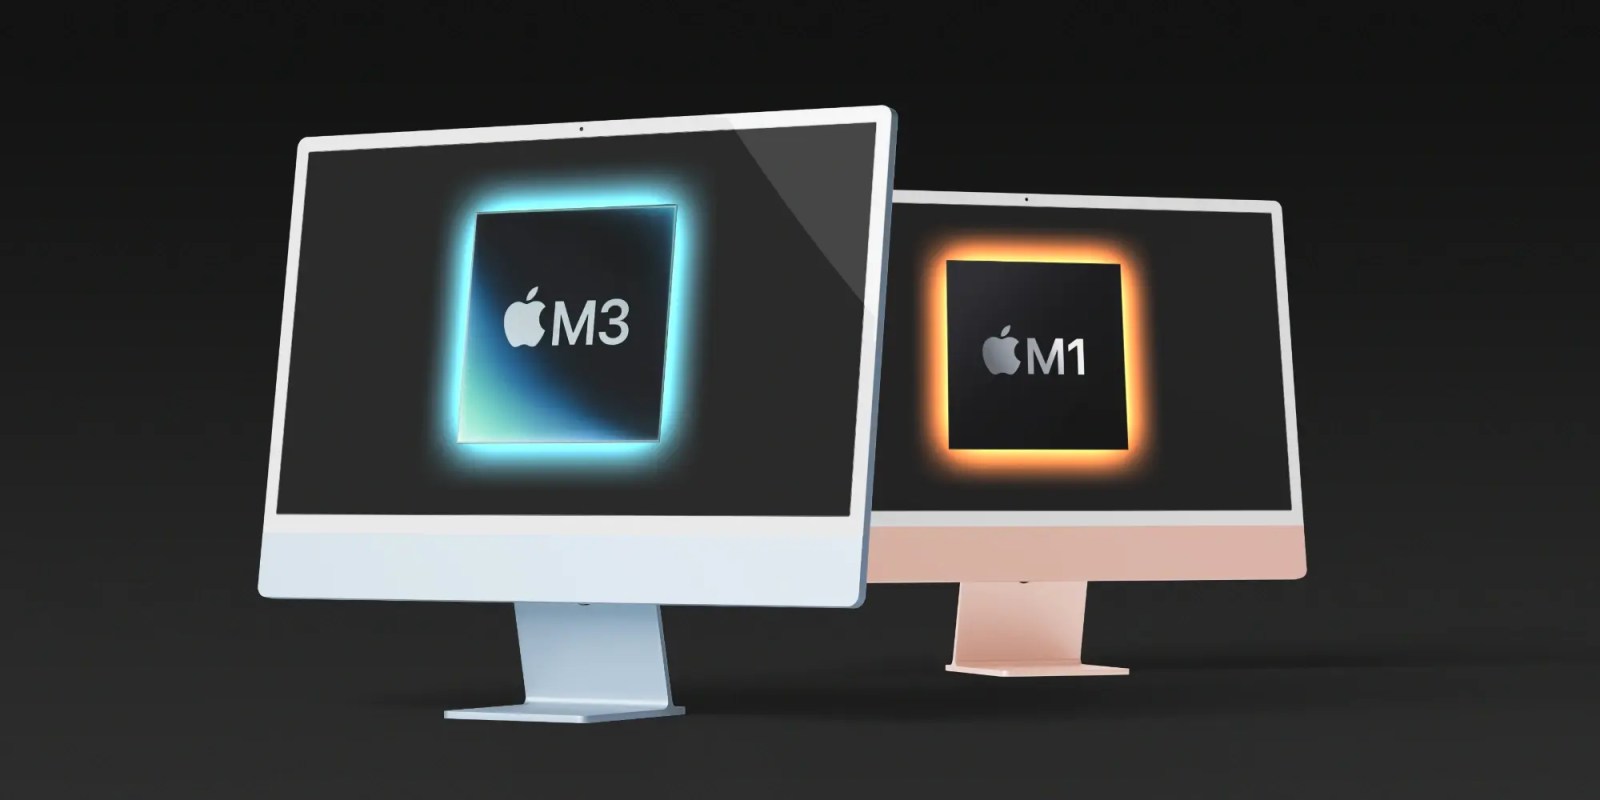 M3 iMac vs M1 iMac - 9to5Mac